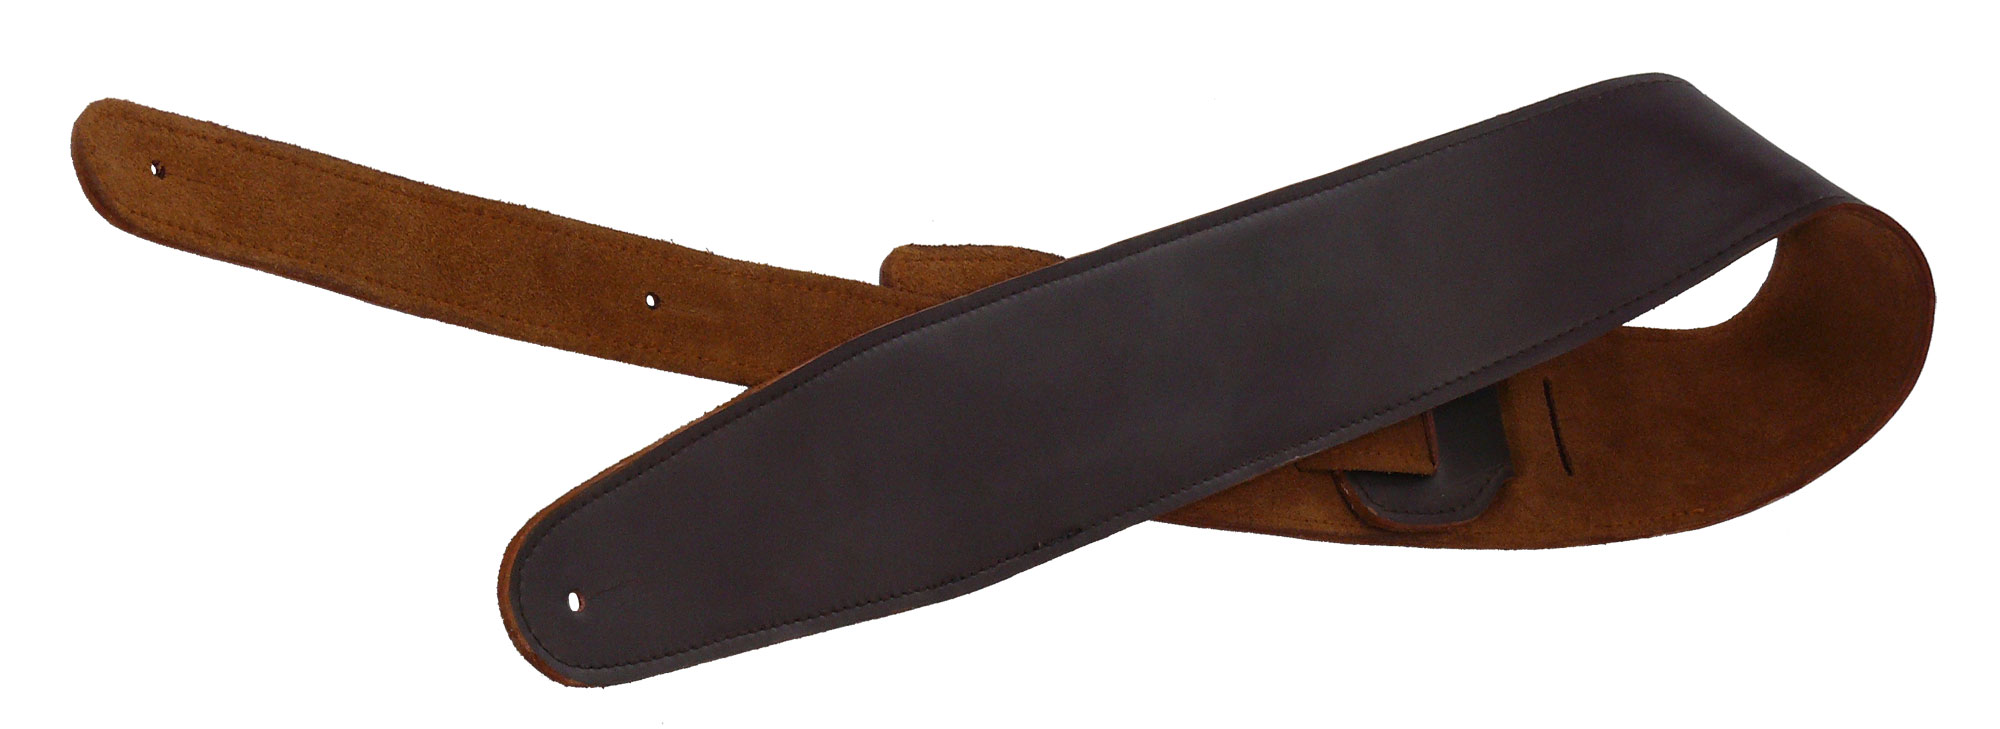 Rocktile G600 Leather Guitar Strap Brown